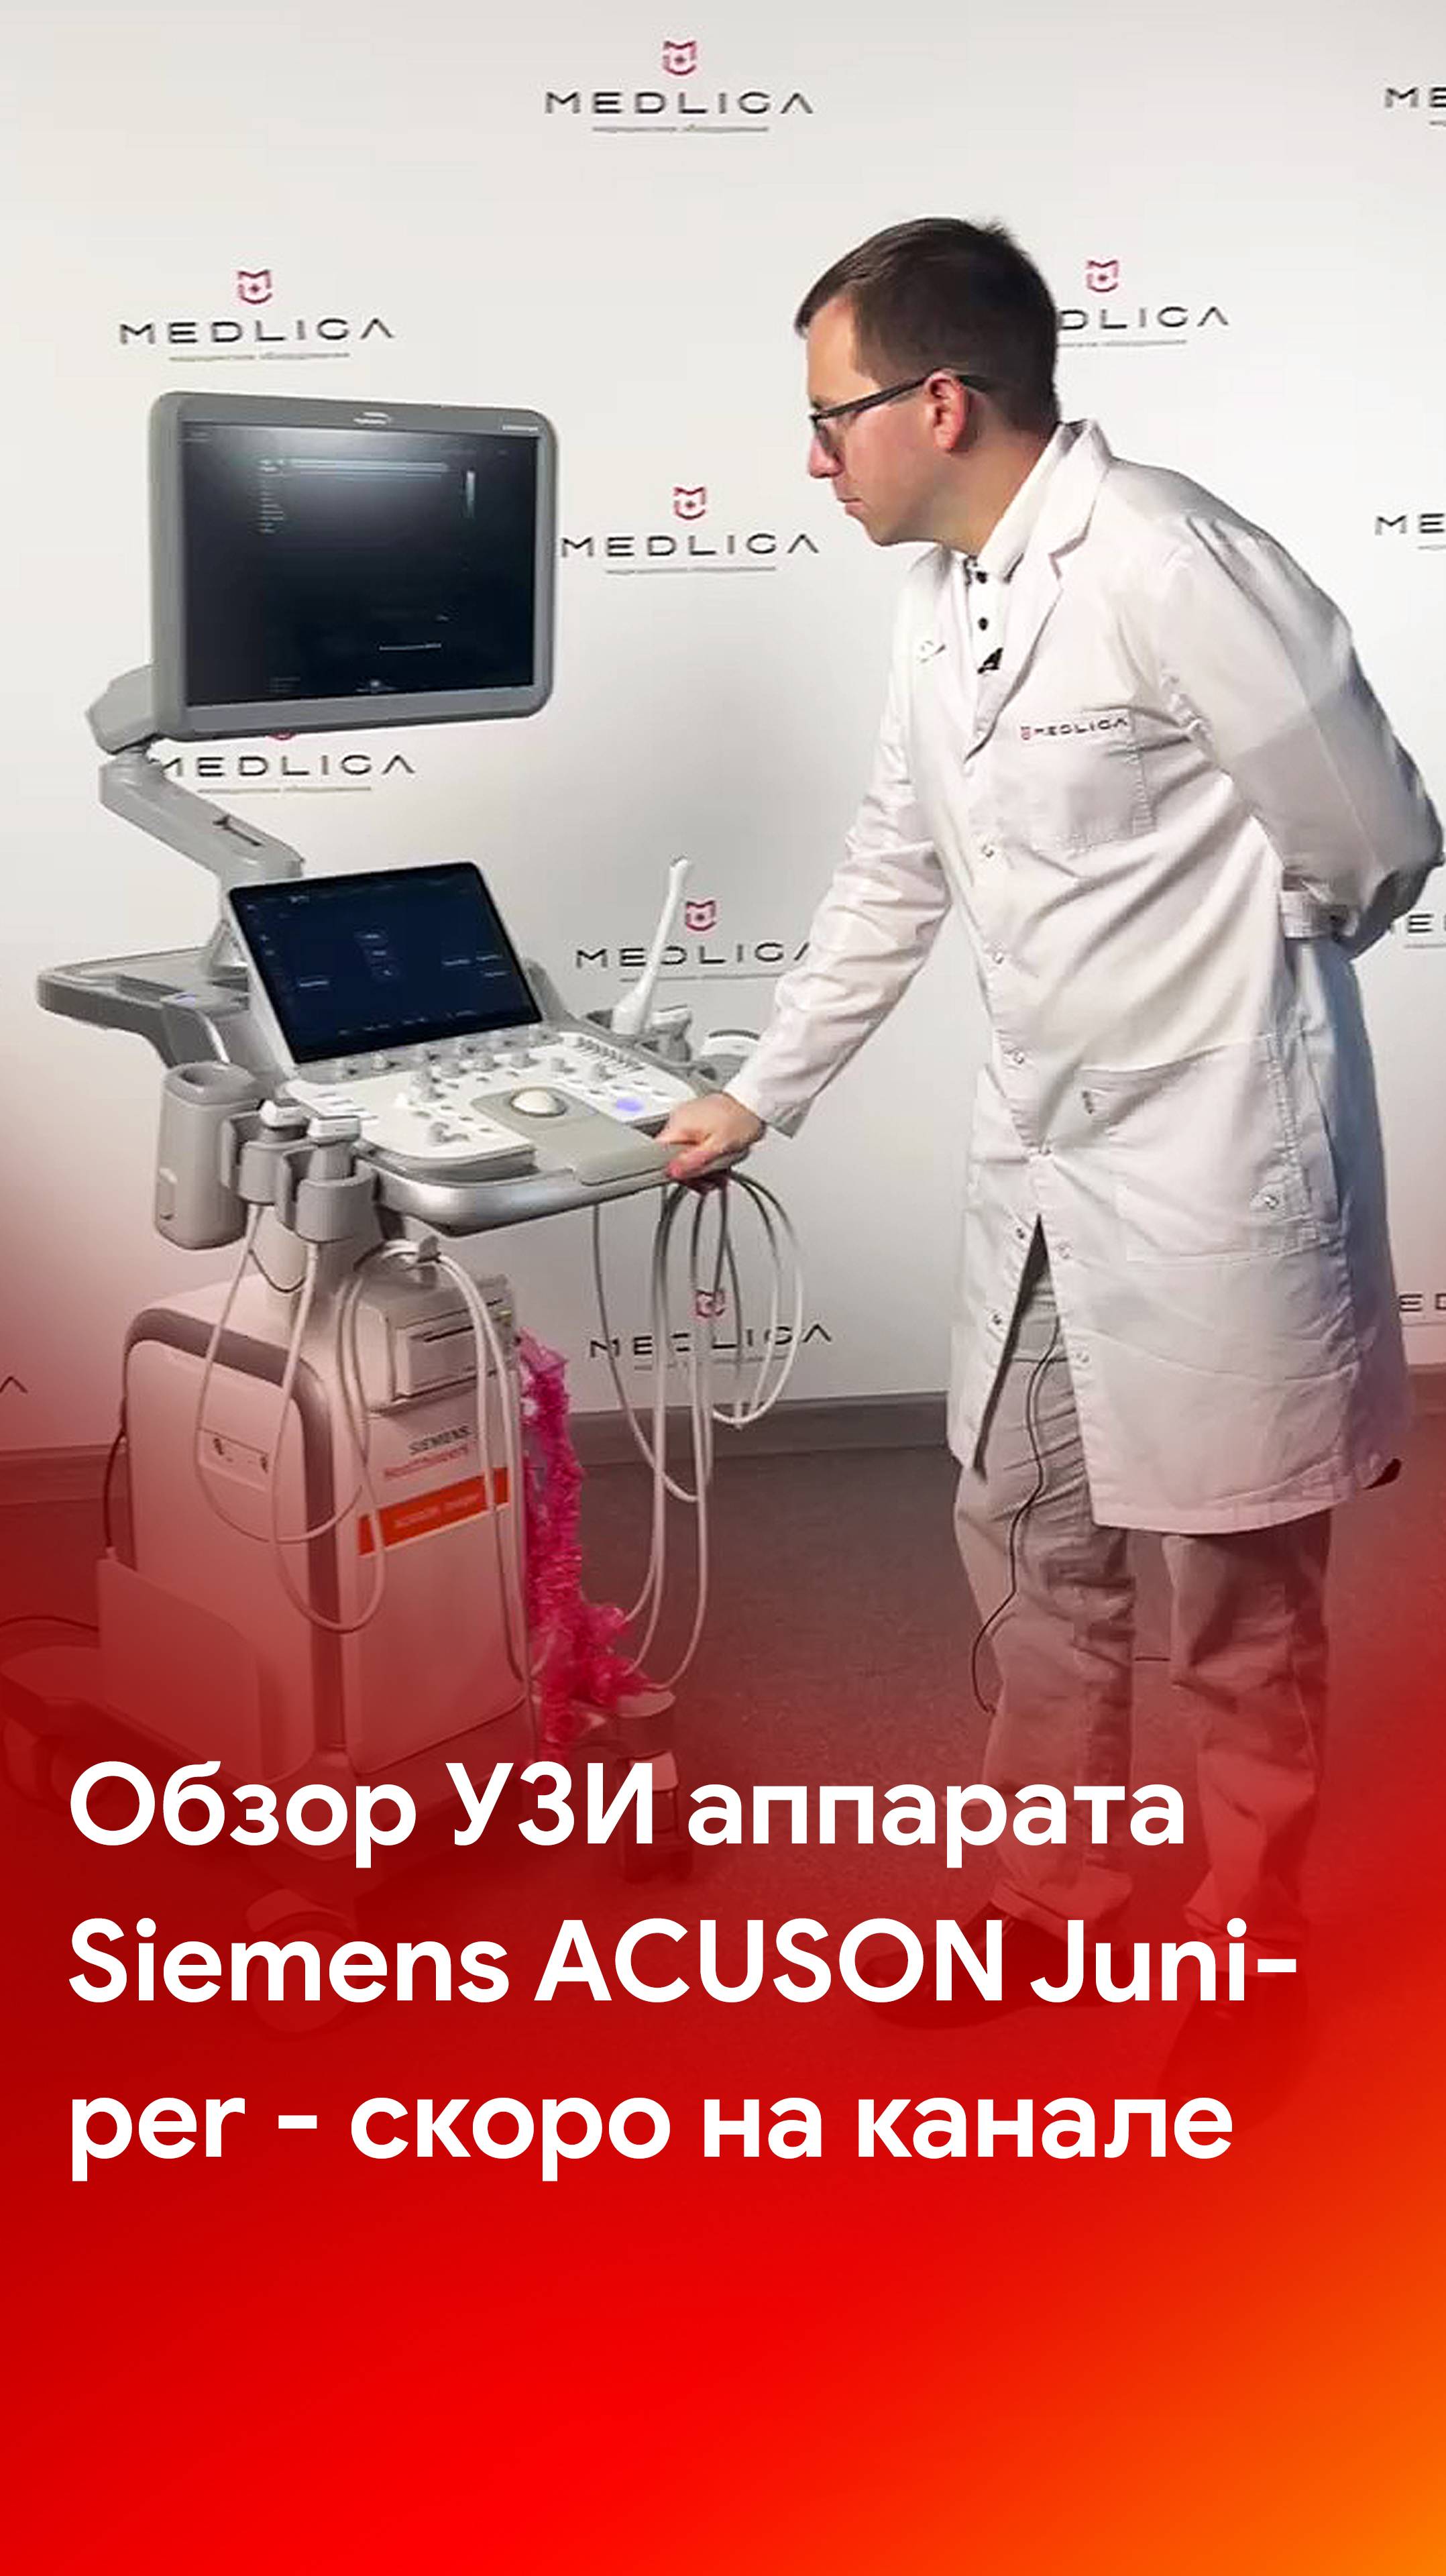 Обзор Siemens Acuson Juniper - cкоро на канале MEDLIGA